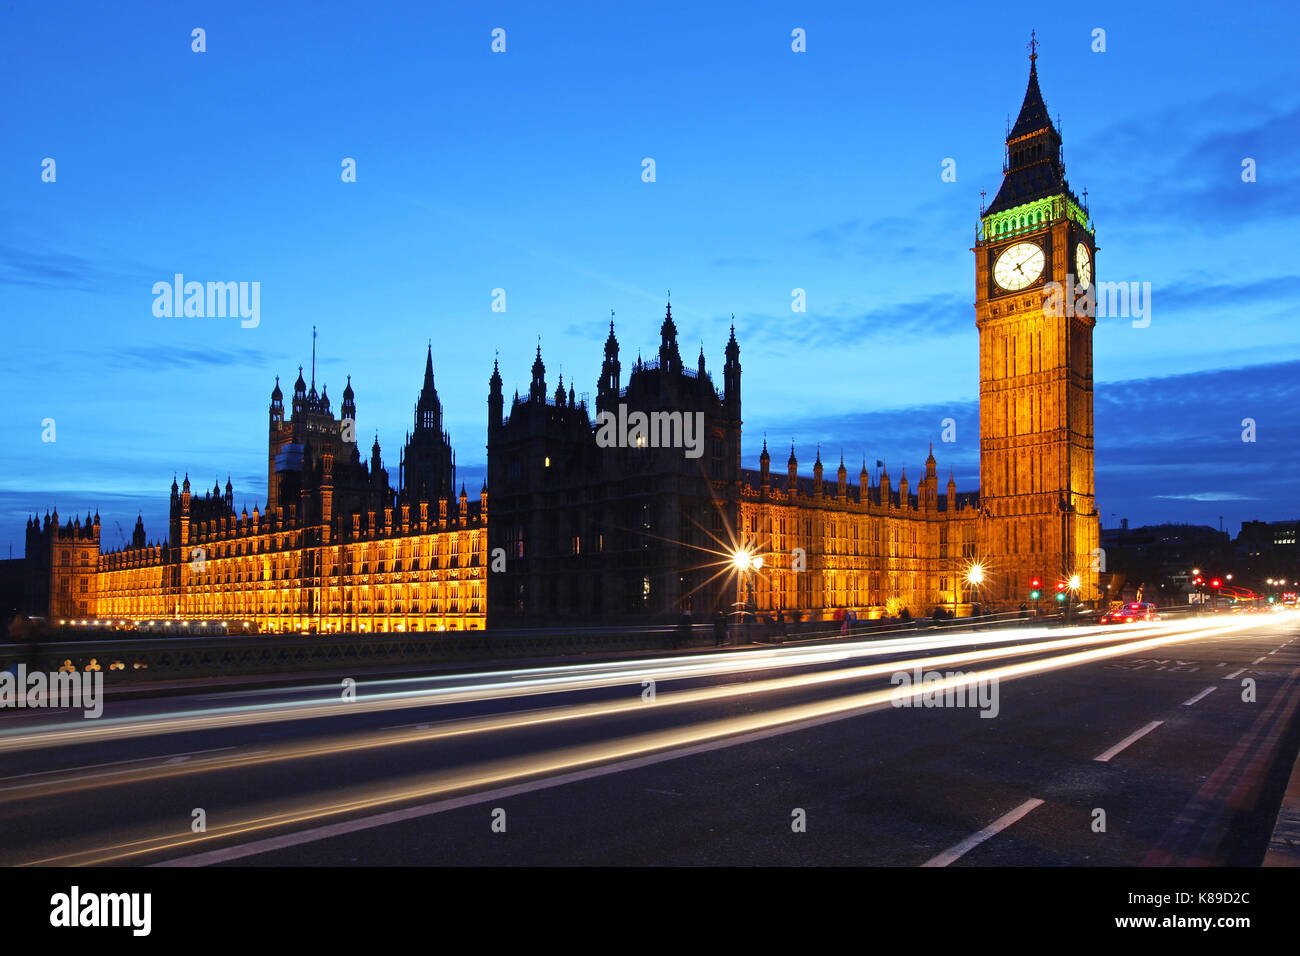 Famous London landmark Big Ben clock during night Stock Photo